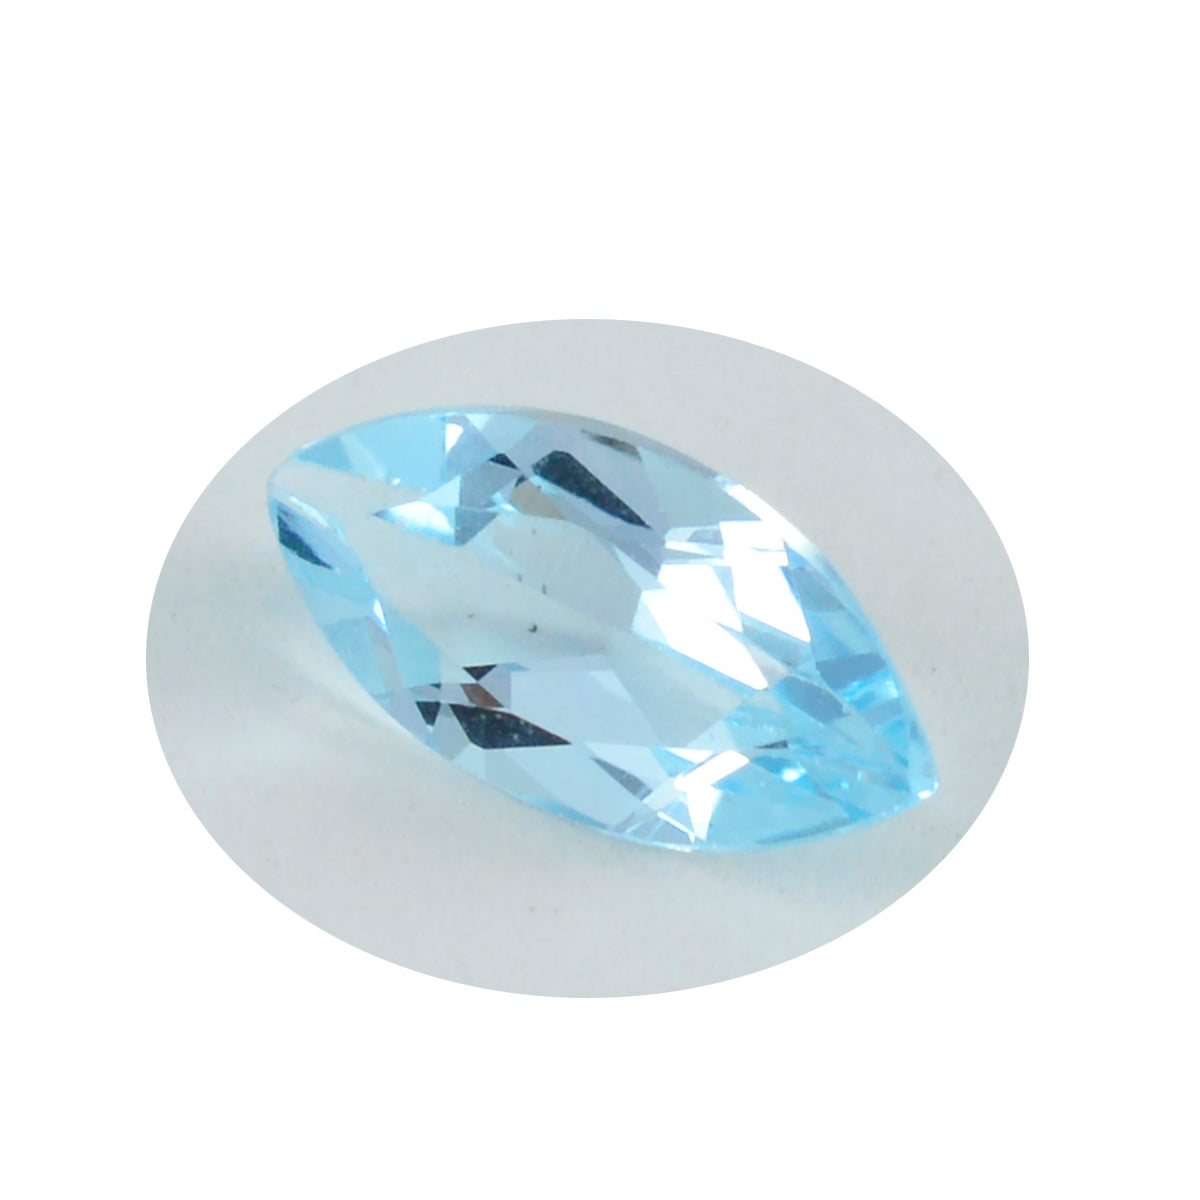 Riyogems 1PC Natural Blue Topaz Faceted 8x16 mm Marquise Shape cute Quality Loose Gems